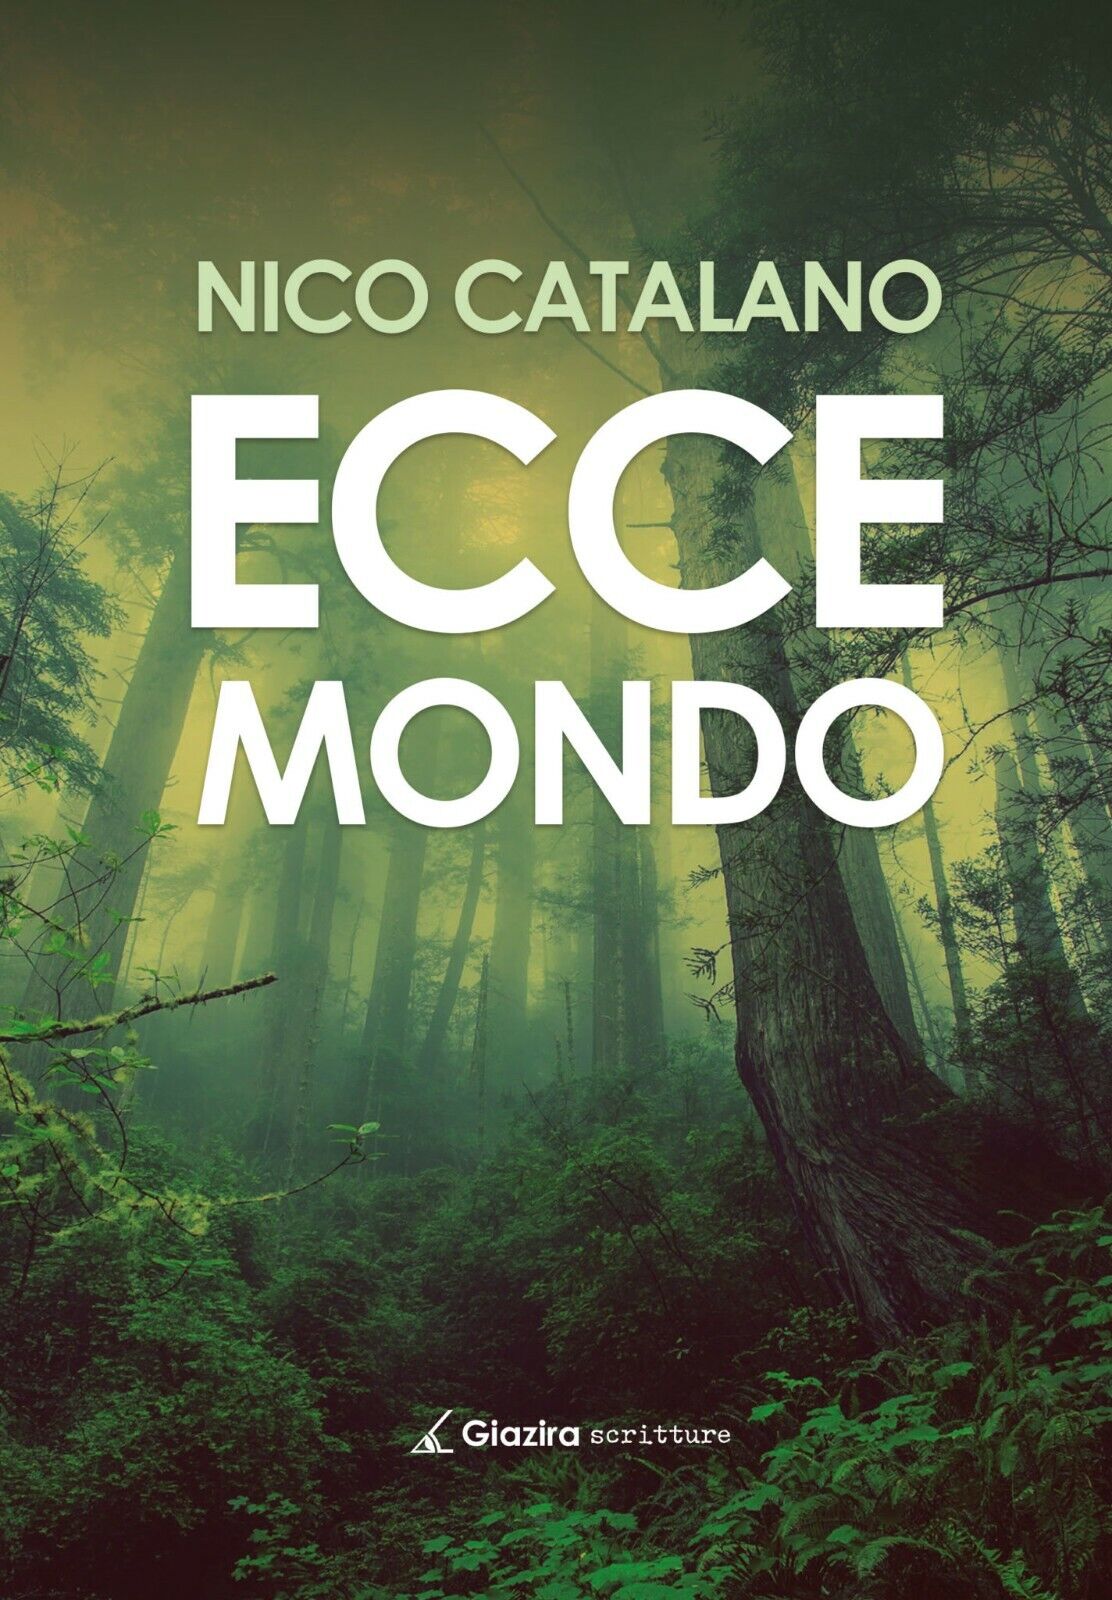 Ecce mondo - Nico Catalano - Giazira - 2020